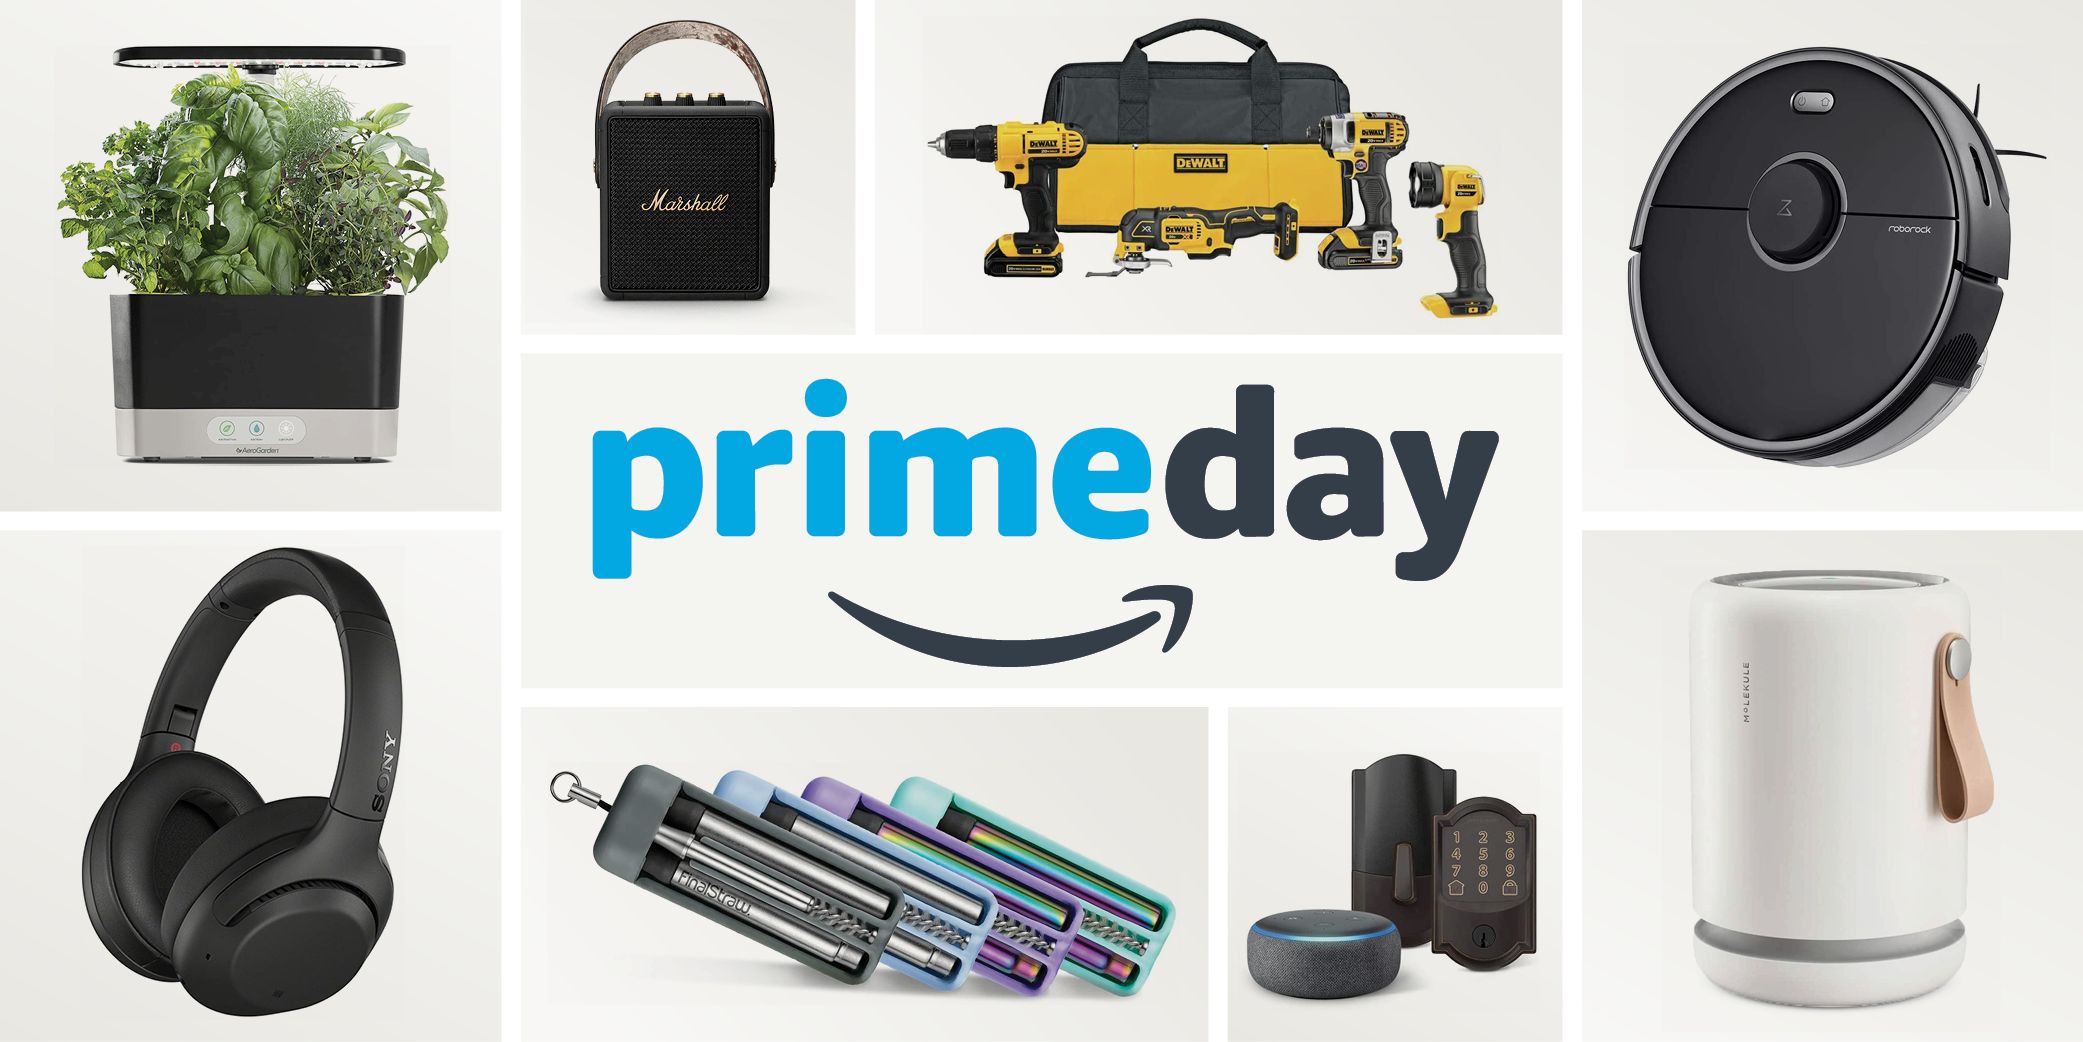 Amazon Prime Day Deals The Best Amazon Prime Day Deals